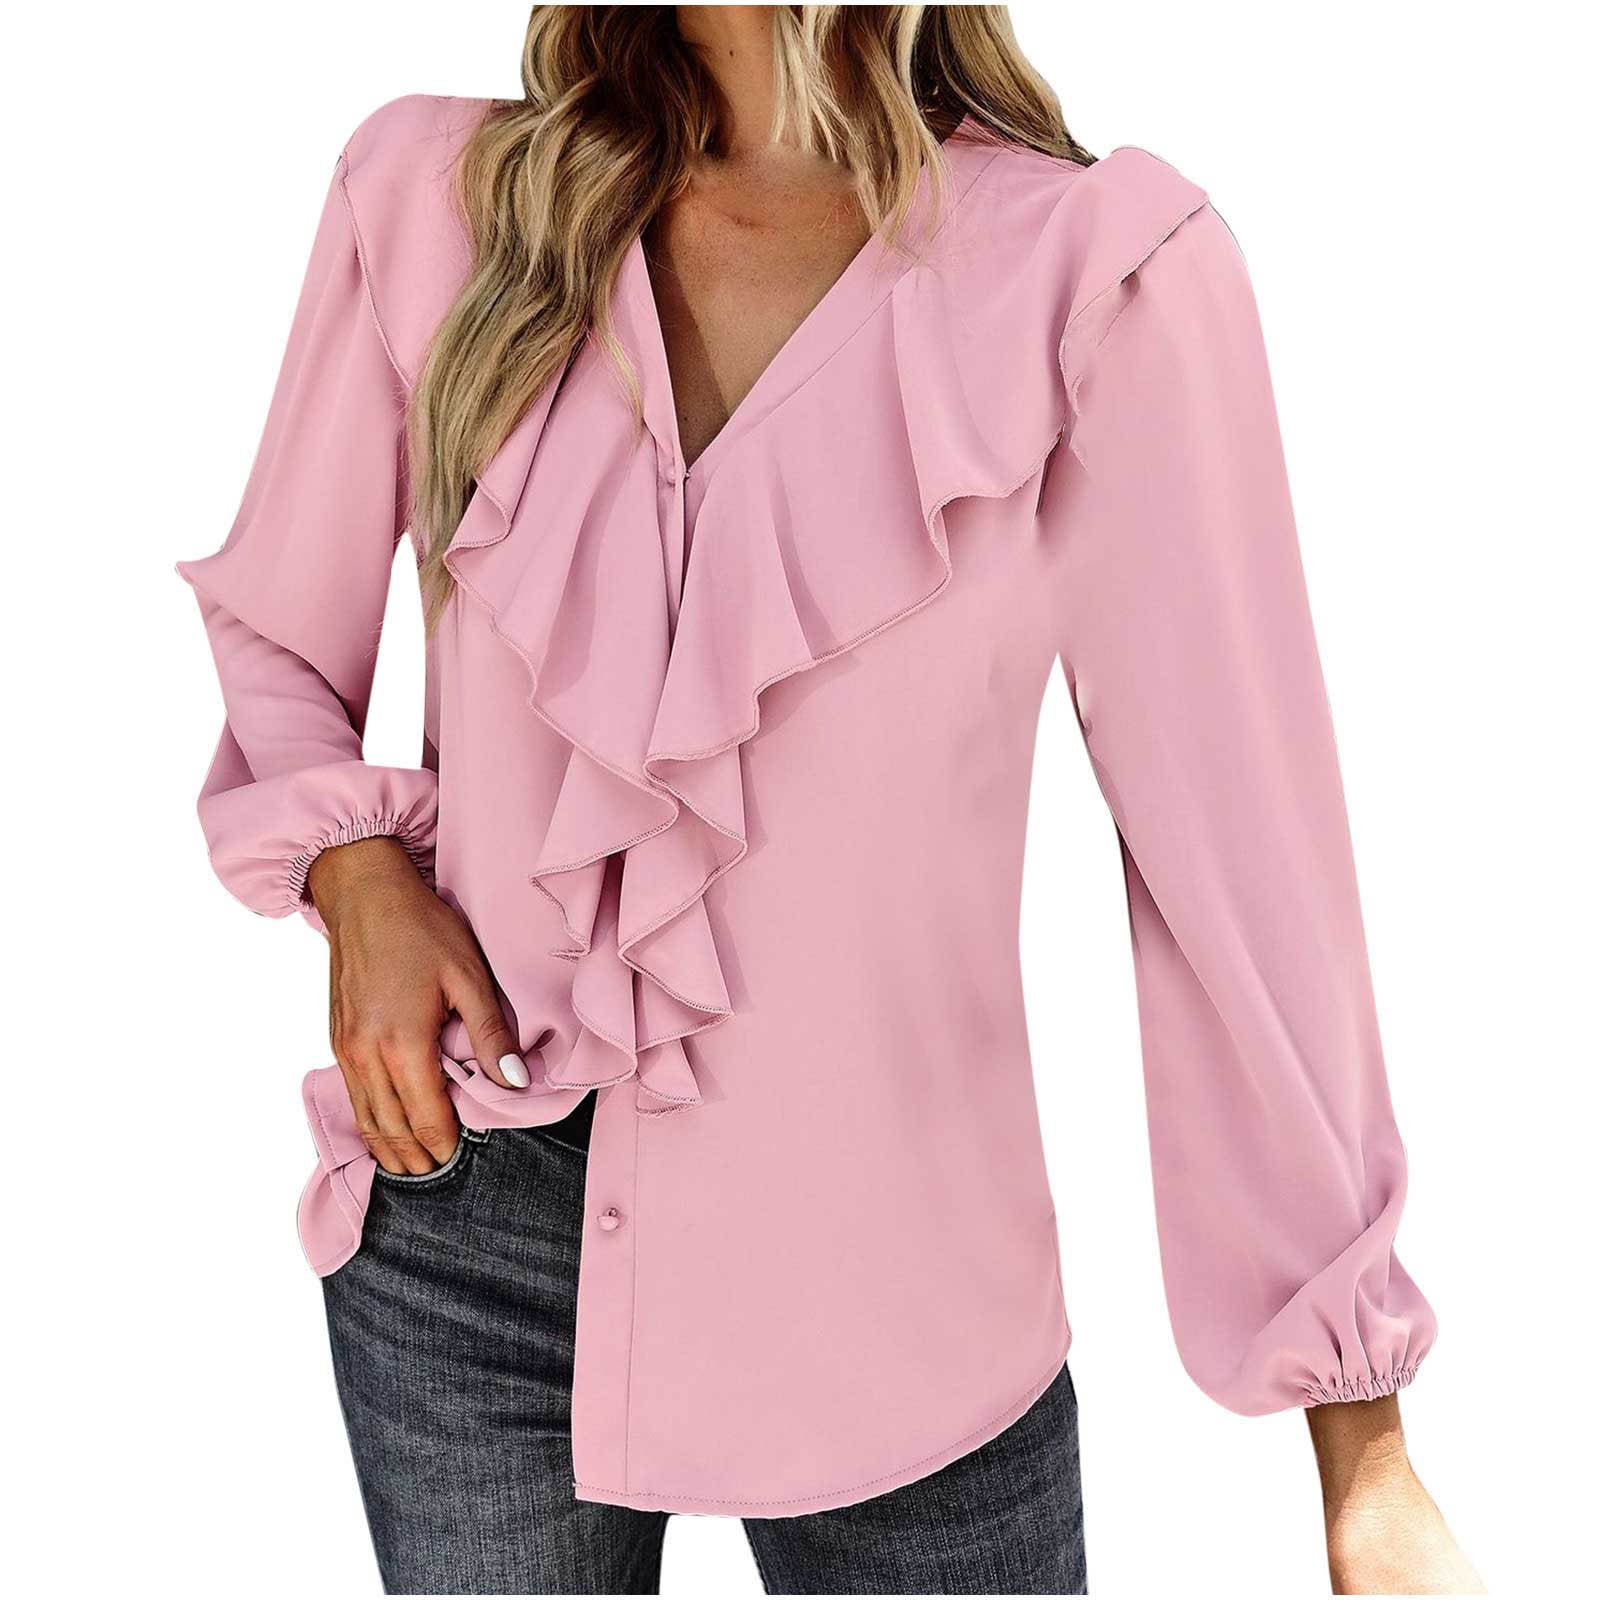 Rejsende Agnes Gray Misforståelse Odeerbi Clearance Womens Tops Long Sleeve Blouses Temperament Elegant Wind  Solid Color Pleated V-Neck Comfortable Shirt Top Pink - Walmart.com